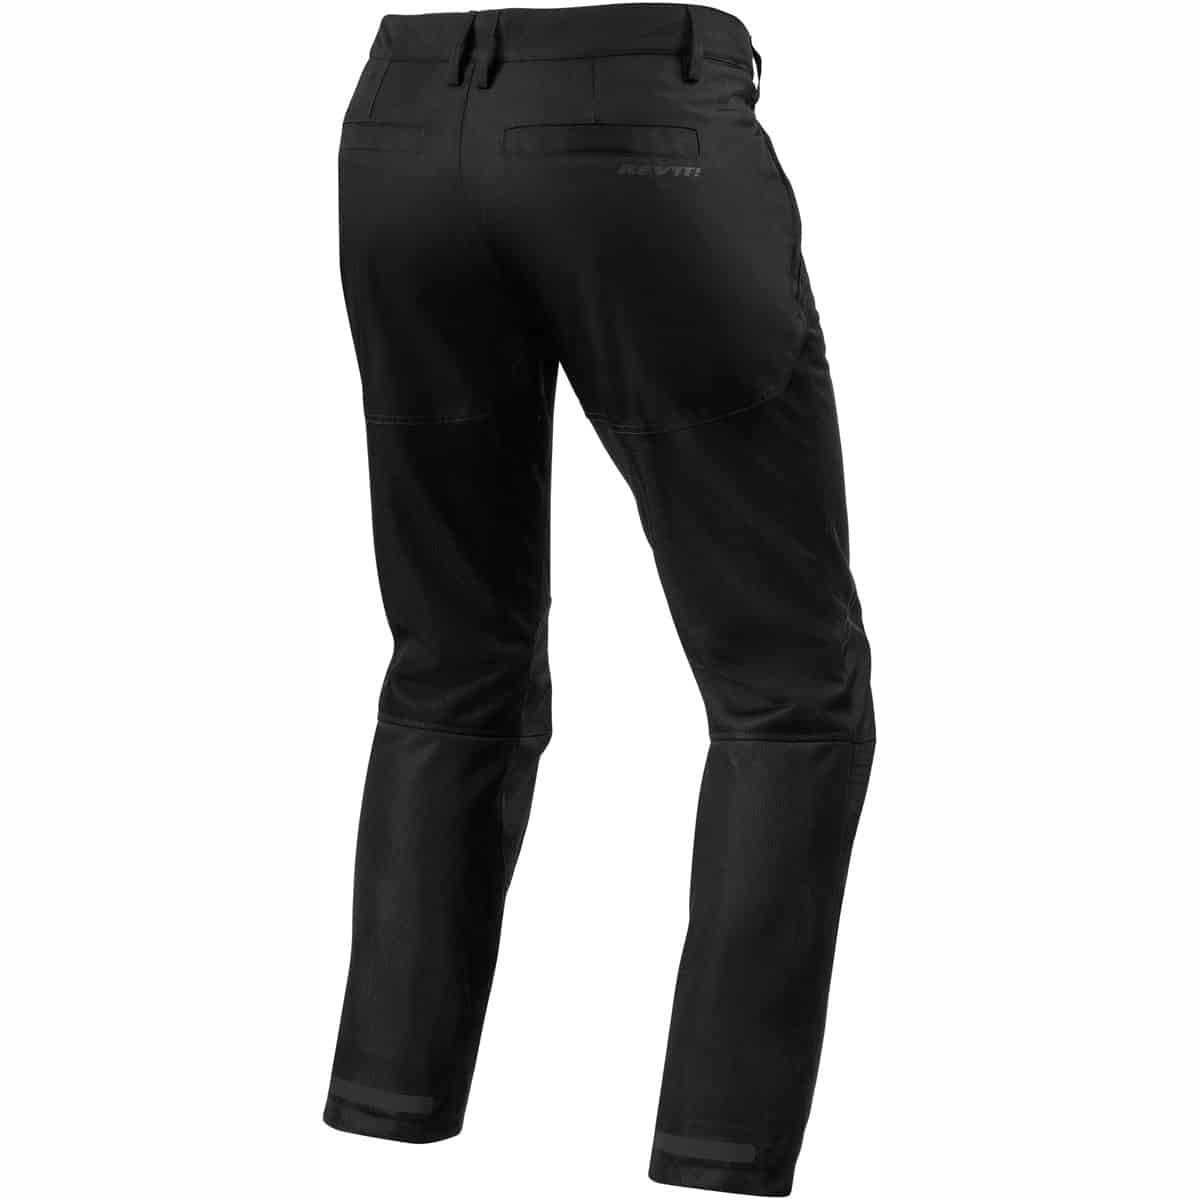 Rev It Eclipse 2 mesh trousers black back